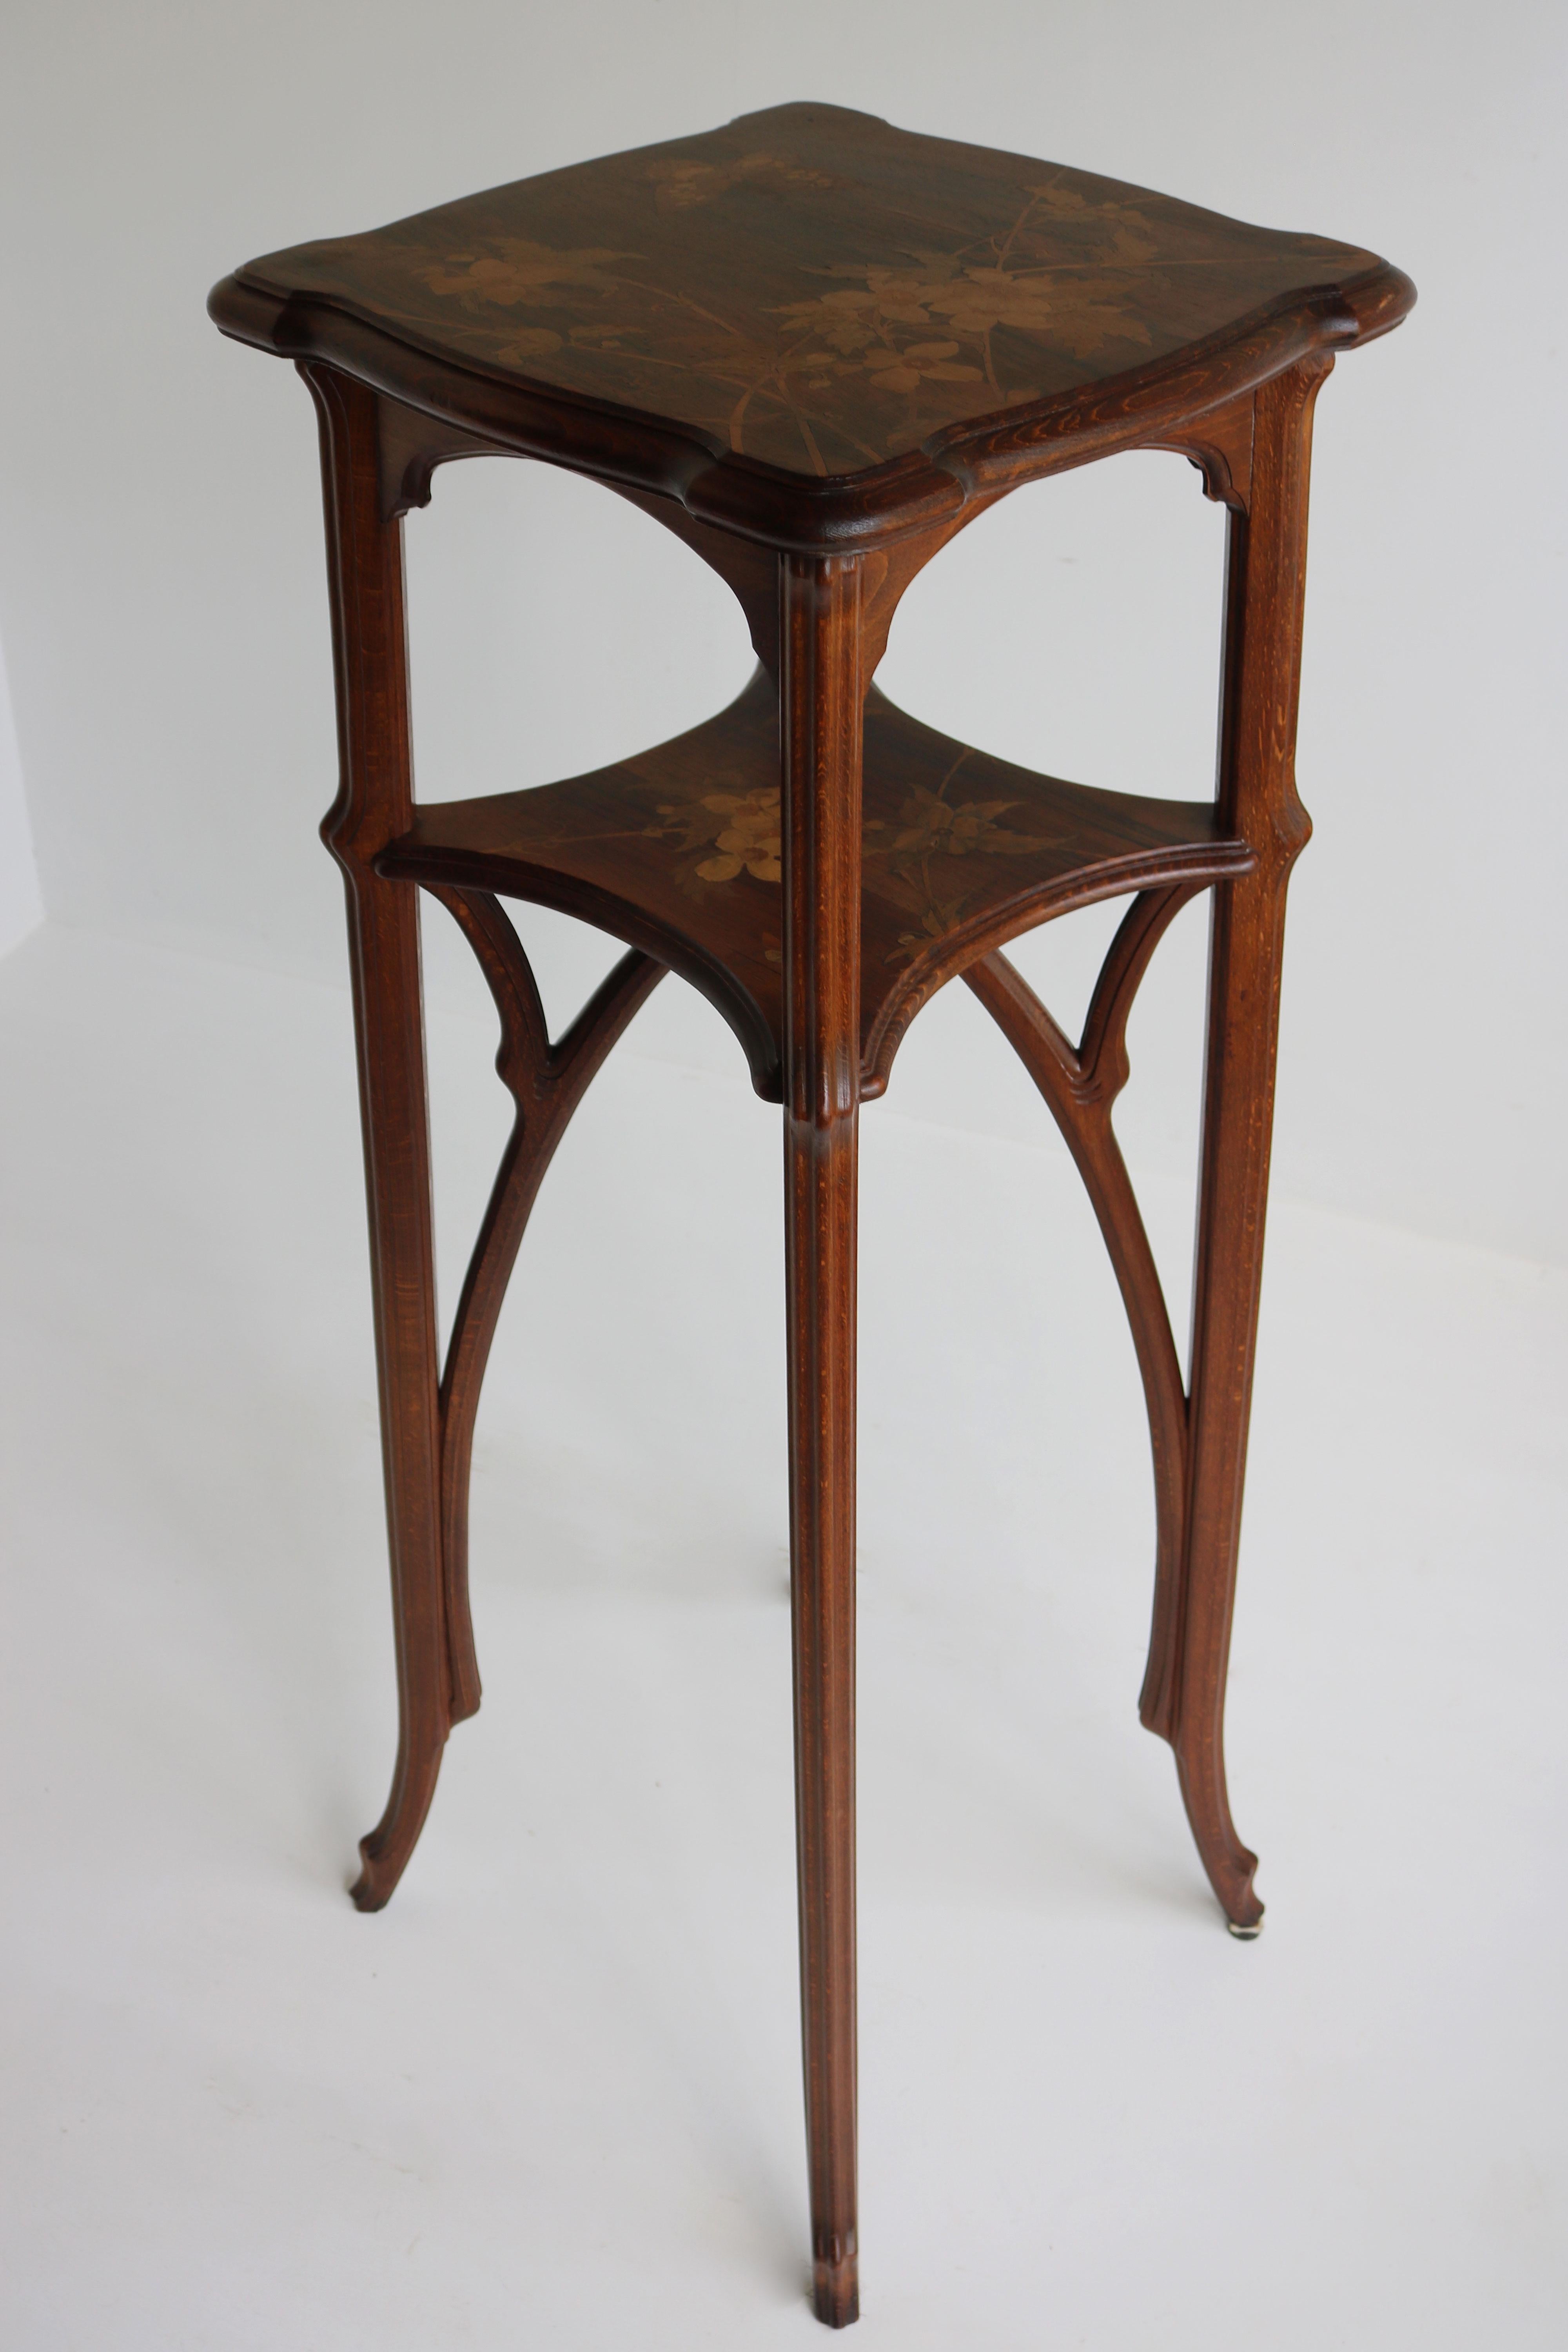 Original Art Nouveau Pedestal by Emile Galle 1890 French Antique Inlaid Table For Sale 8